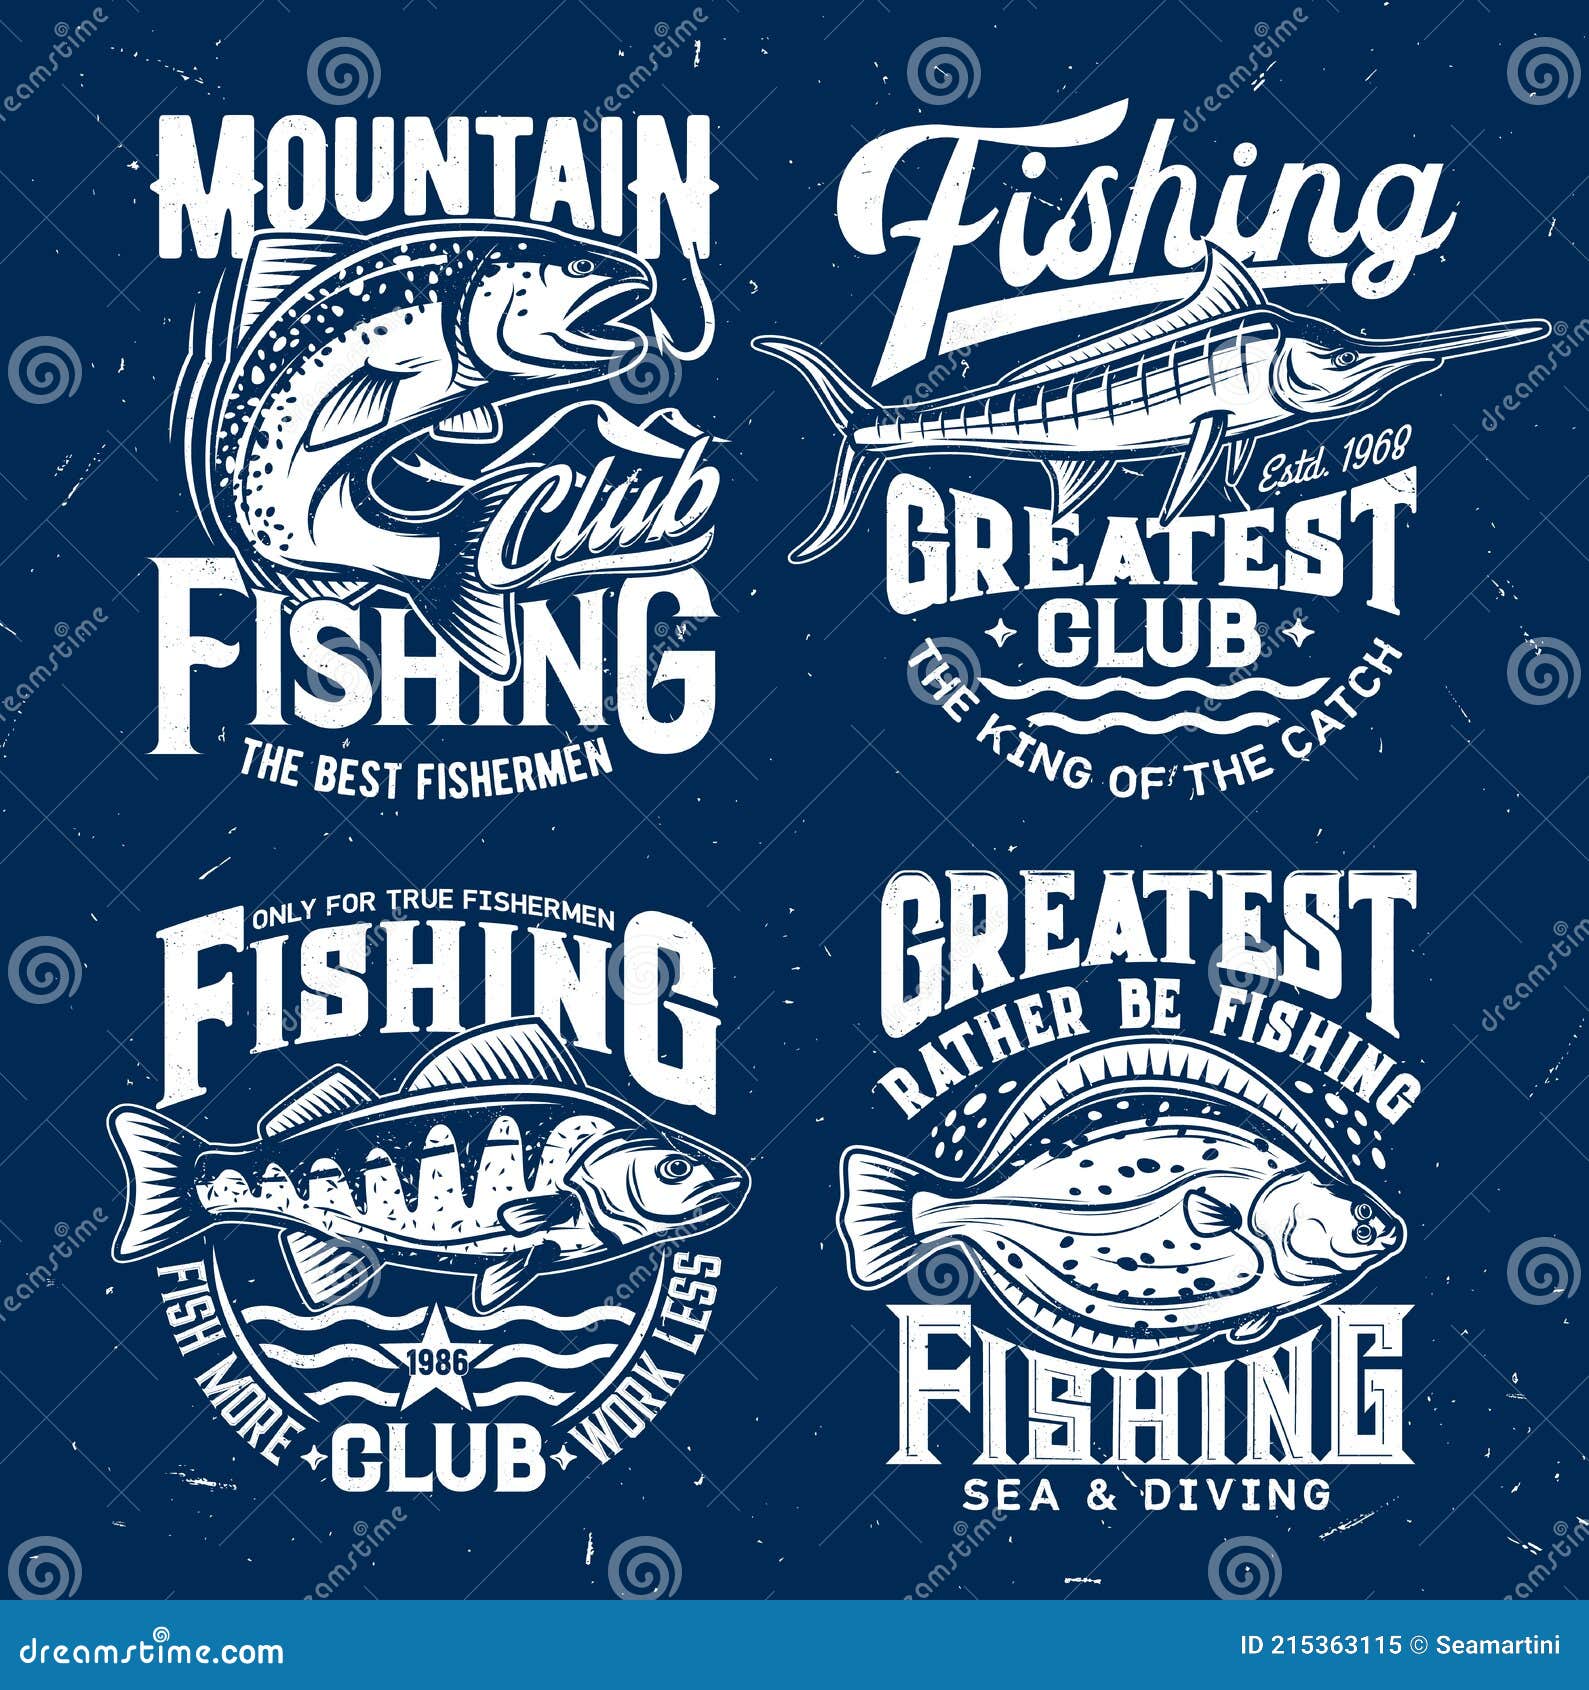 https://thumbs.dreamstime.com/z/fishing-sport-t-shirt-vector-prints-river-marine-club-print-salmon-fish-catching-fishhook-perch-marlin-engraved-flounder-215363115.jpg